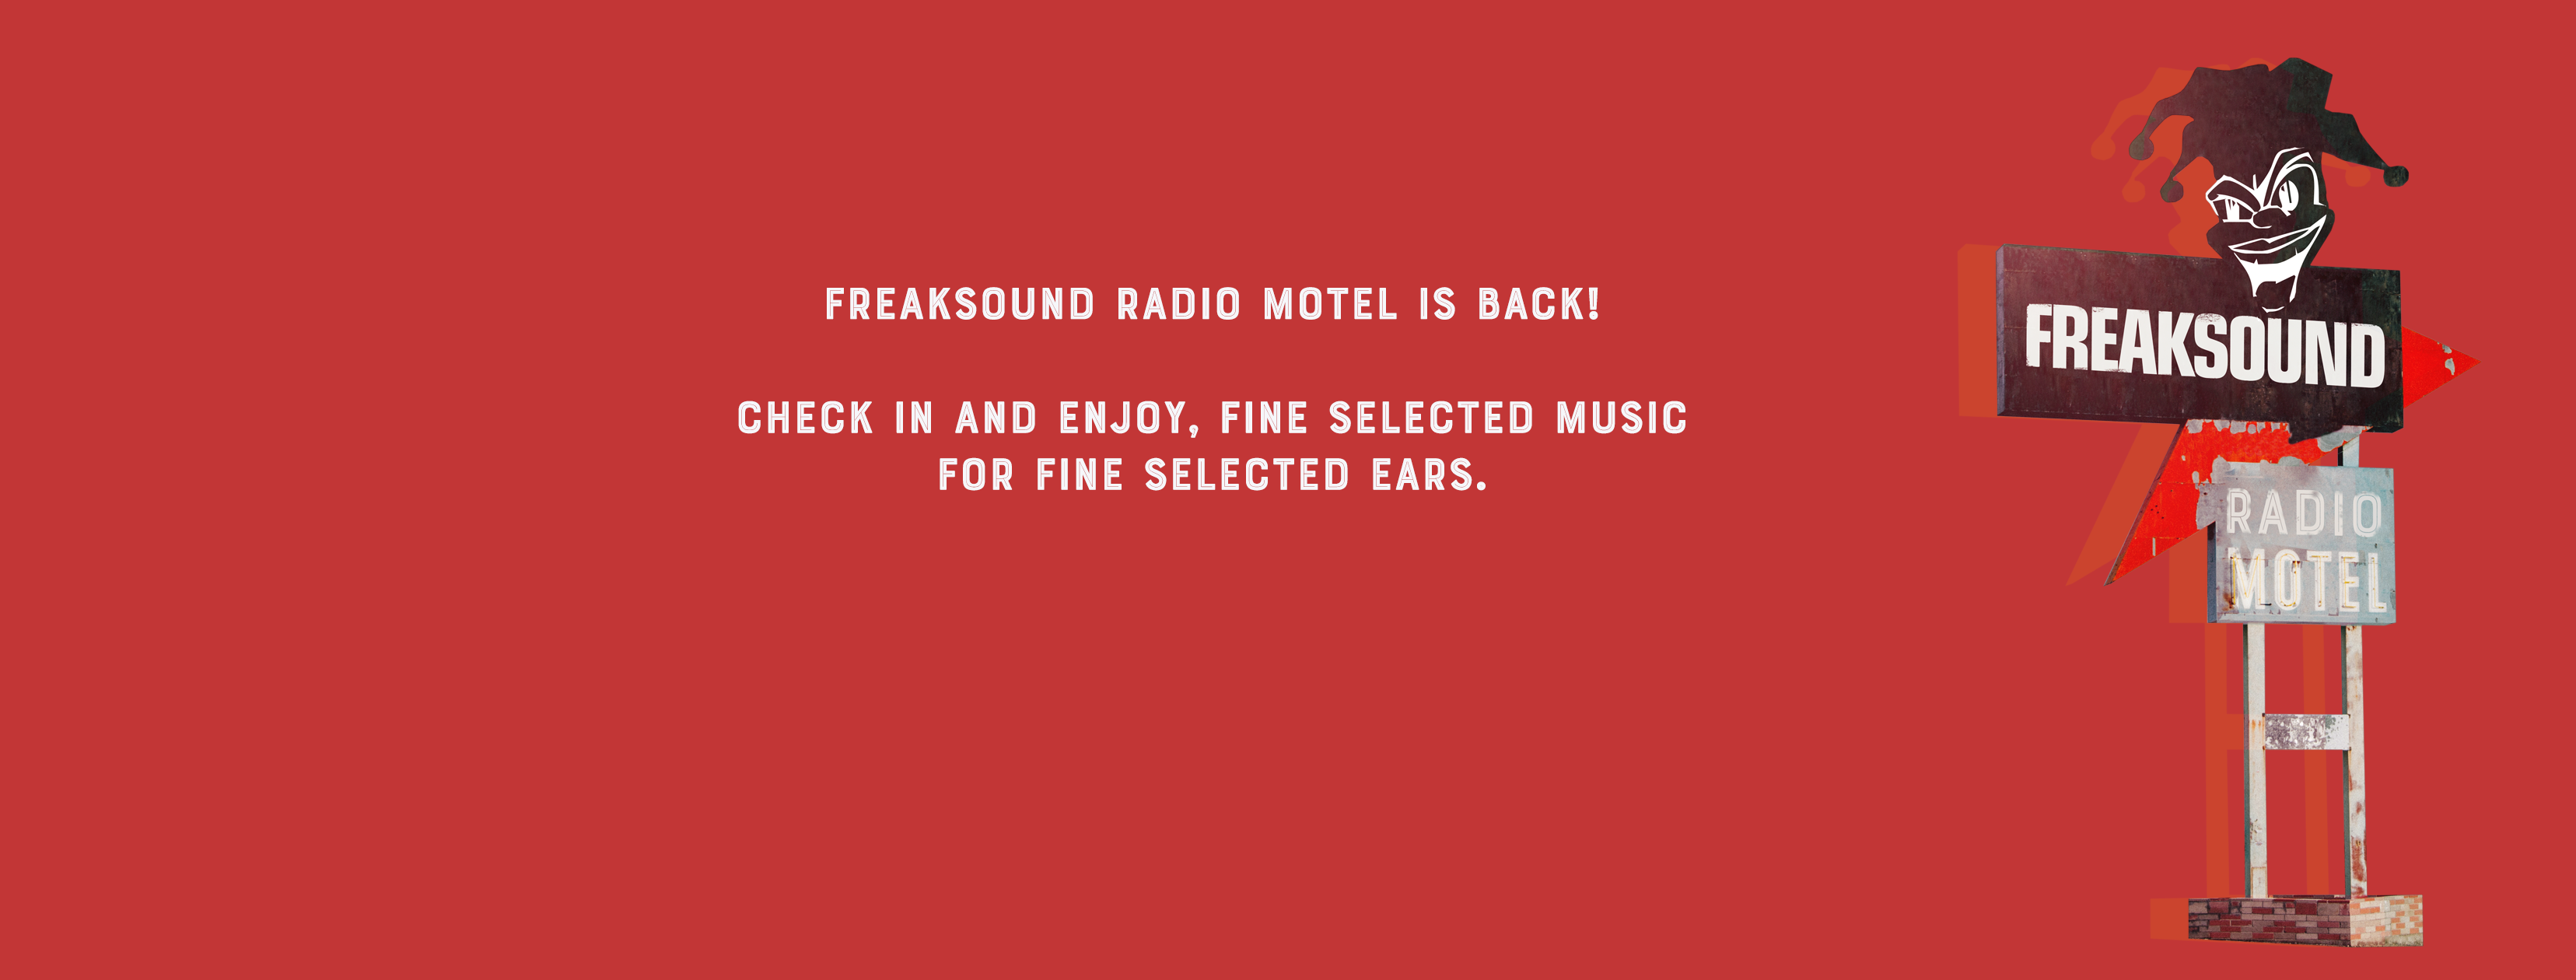 Freaksound Radio Motel